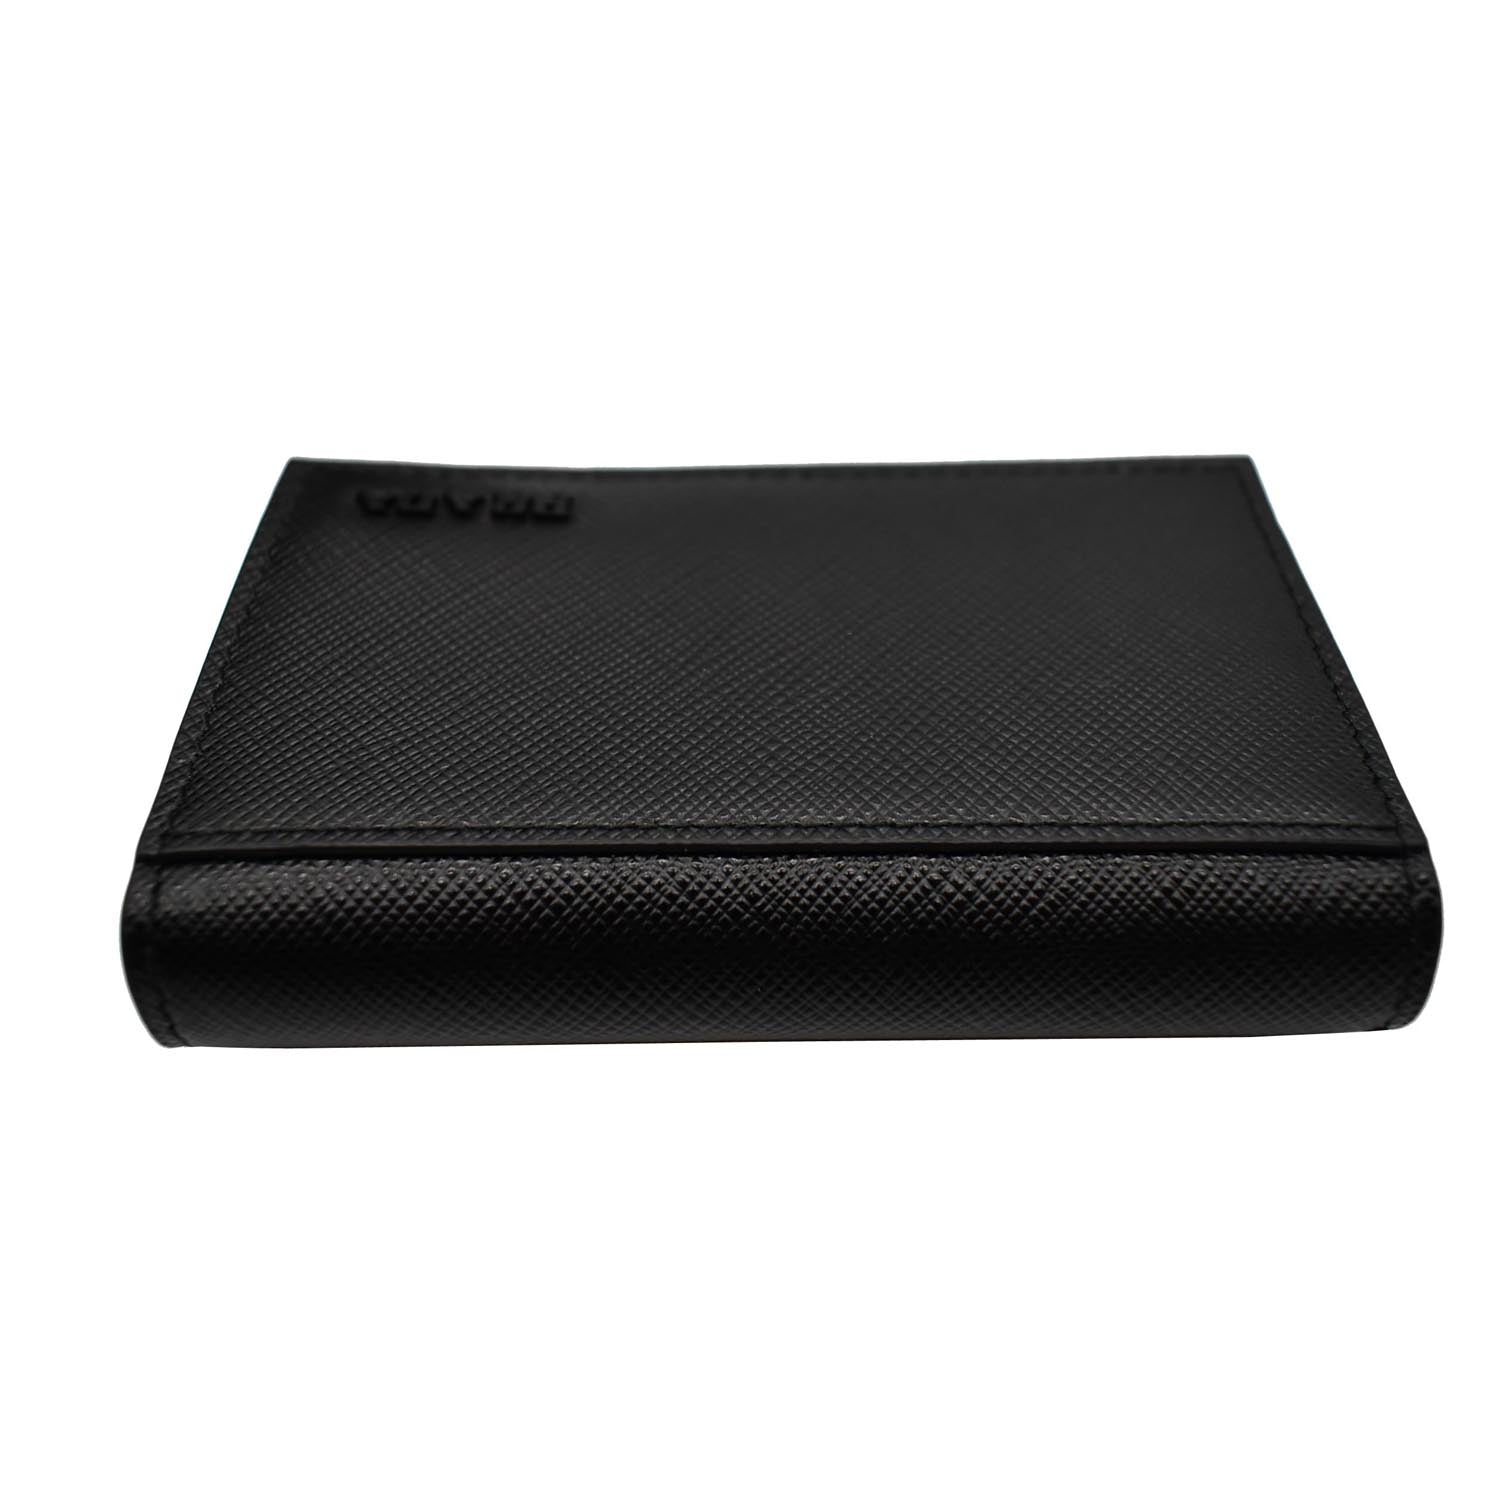 Prada Saffiano Leather Card Case Wallet